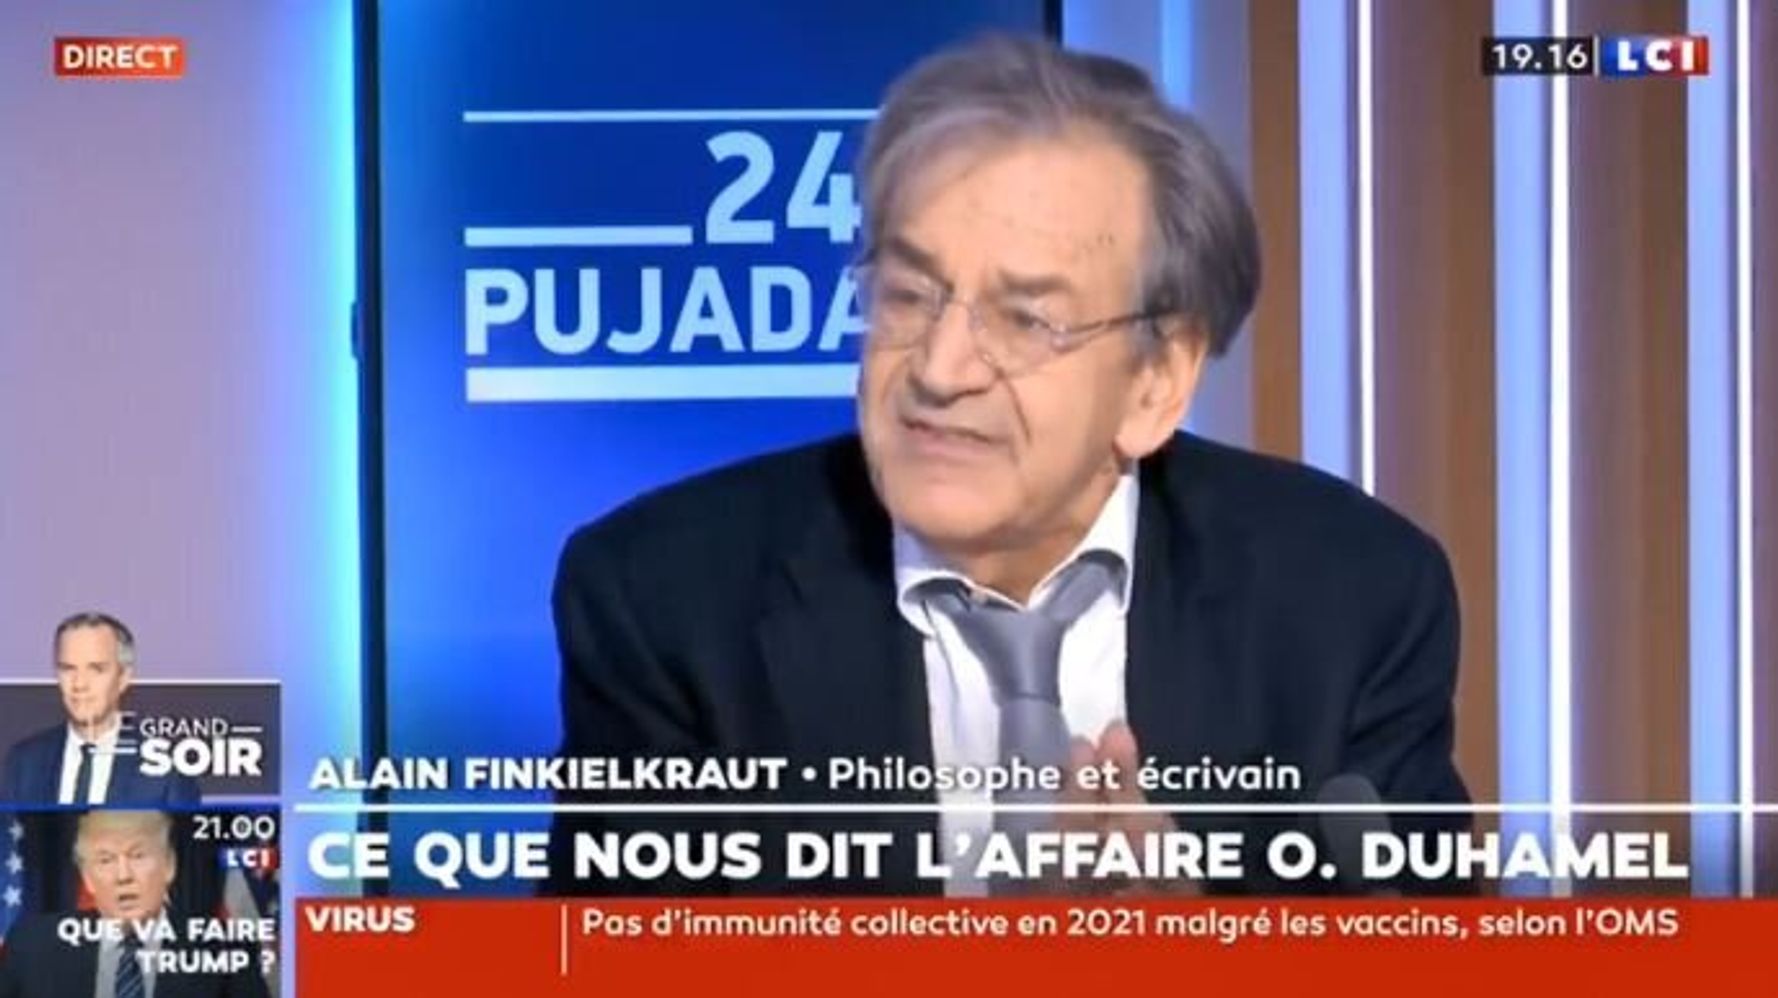 Alain Finkielkraut Trahit Son Role D Intellectuel Dans Sa Defense D Olivier Duhamel Le Huffpost